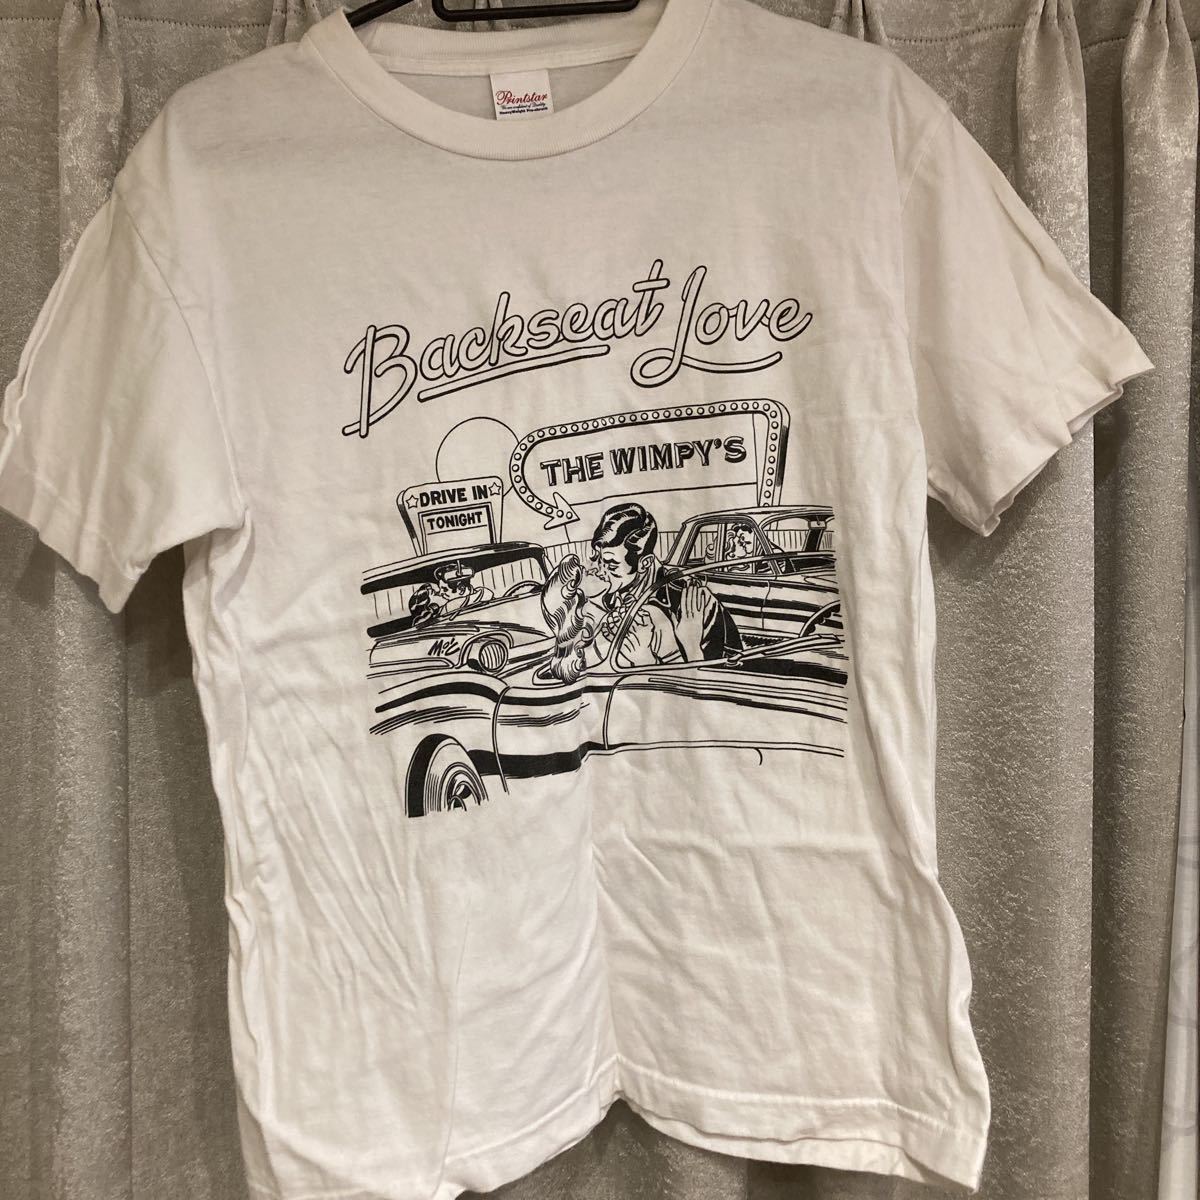 The Wimpy’s バンドTシャツ　poppunk ramones ramonescore popball records_画像1